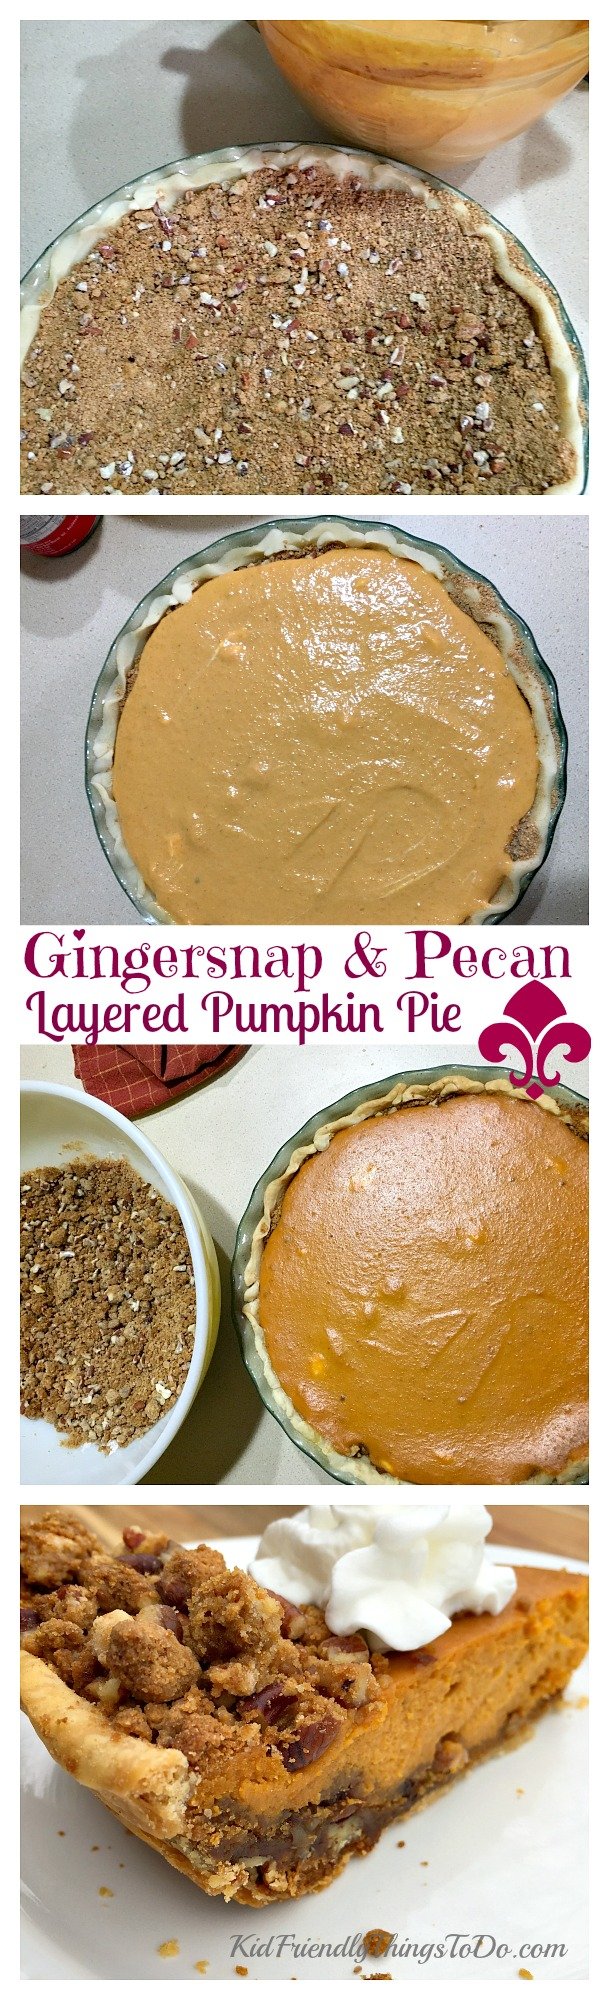 Gingersnap and Pecan Layered Pumpkin Pie Recipe